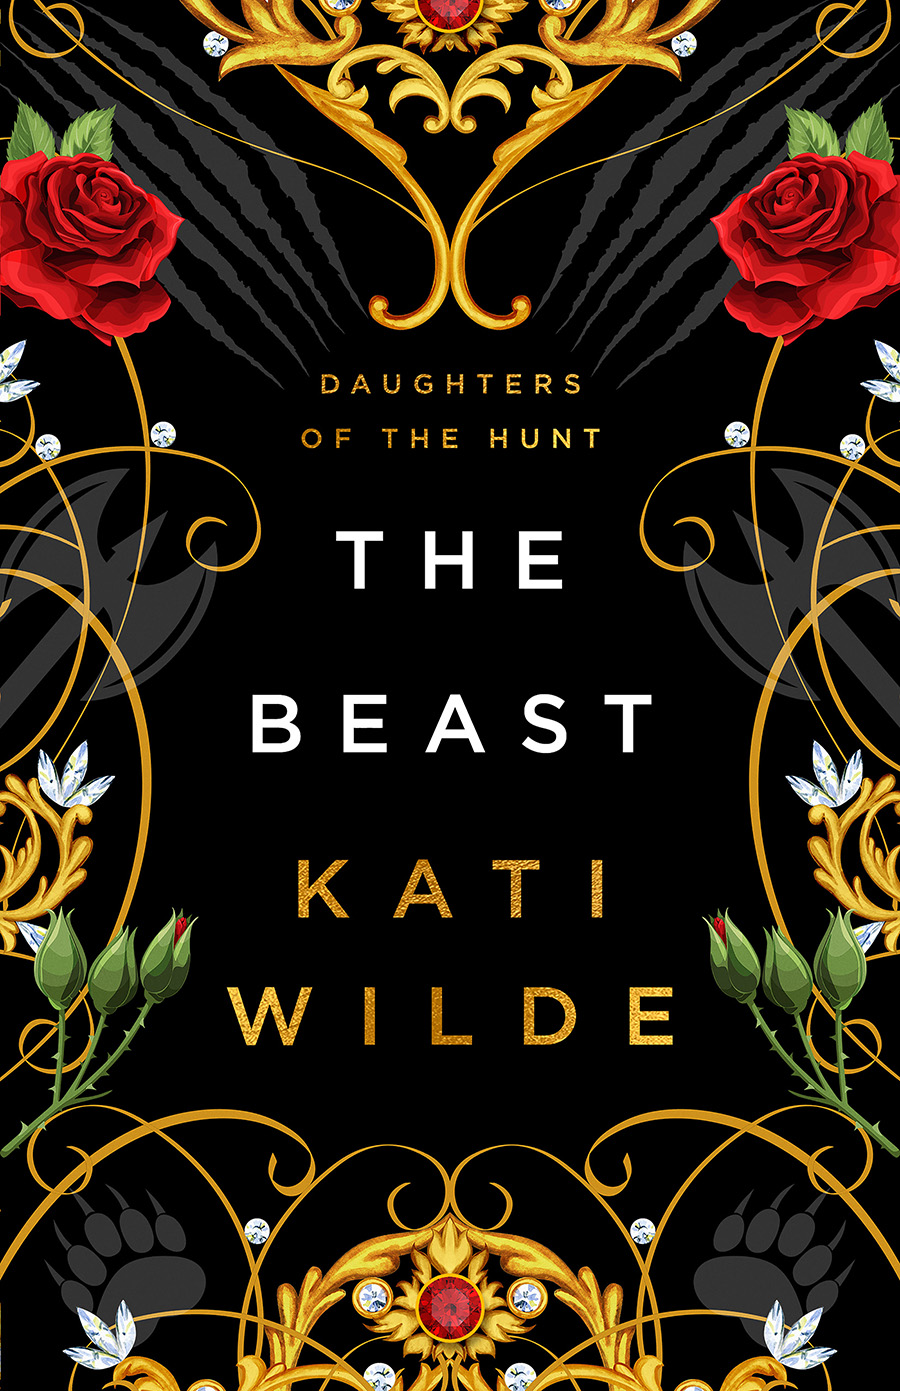 The Beast by Kati Wilde